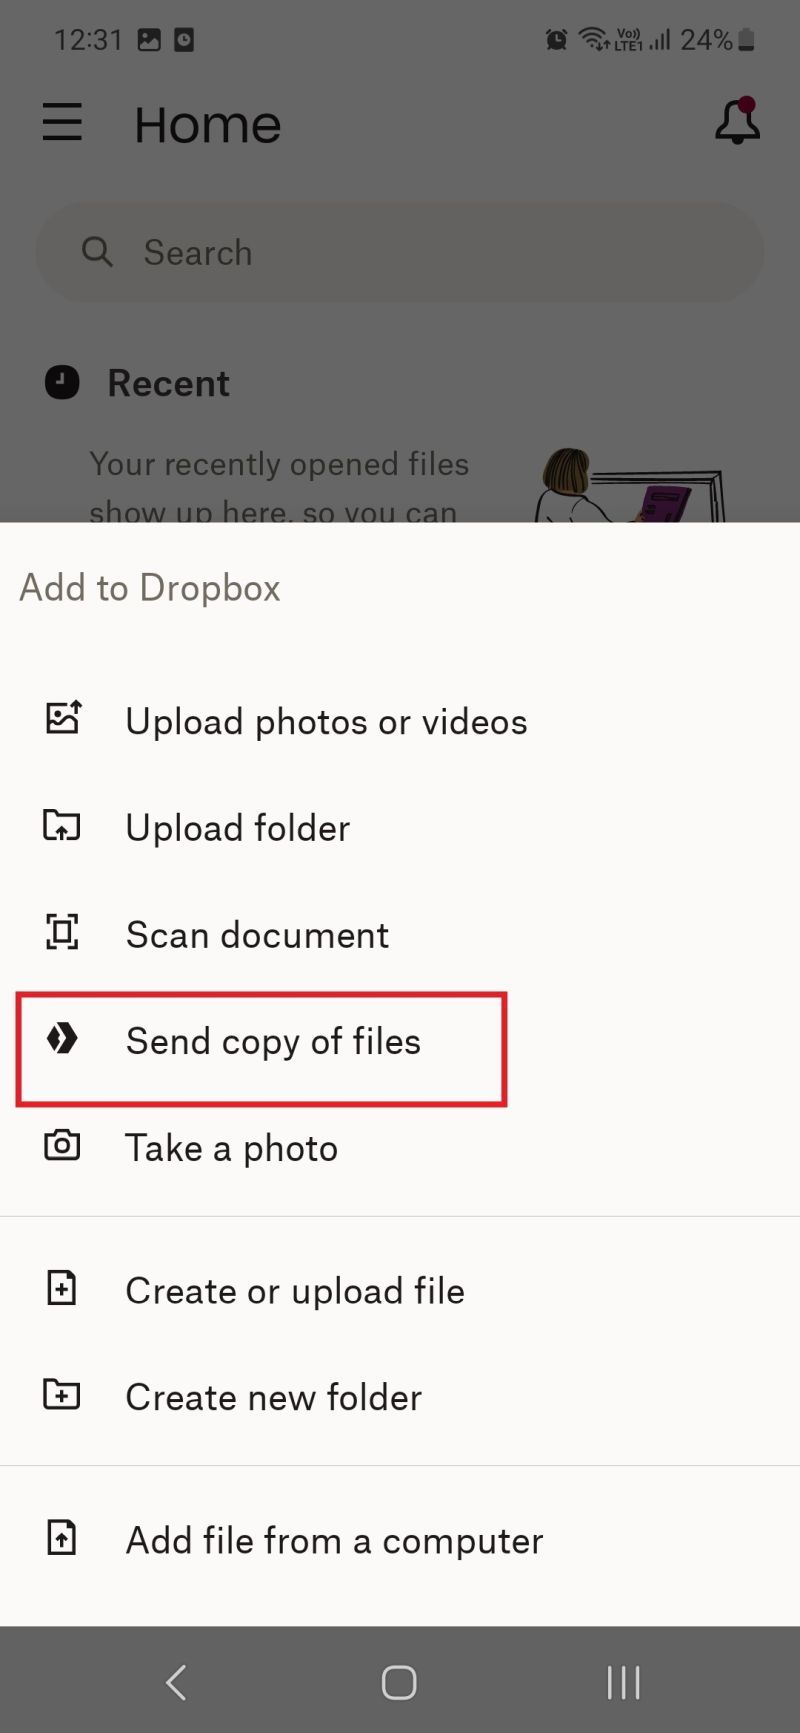 Screenshot of Send copy of files option in dropbox